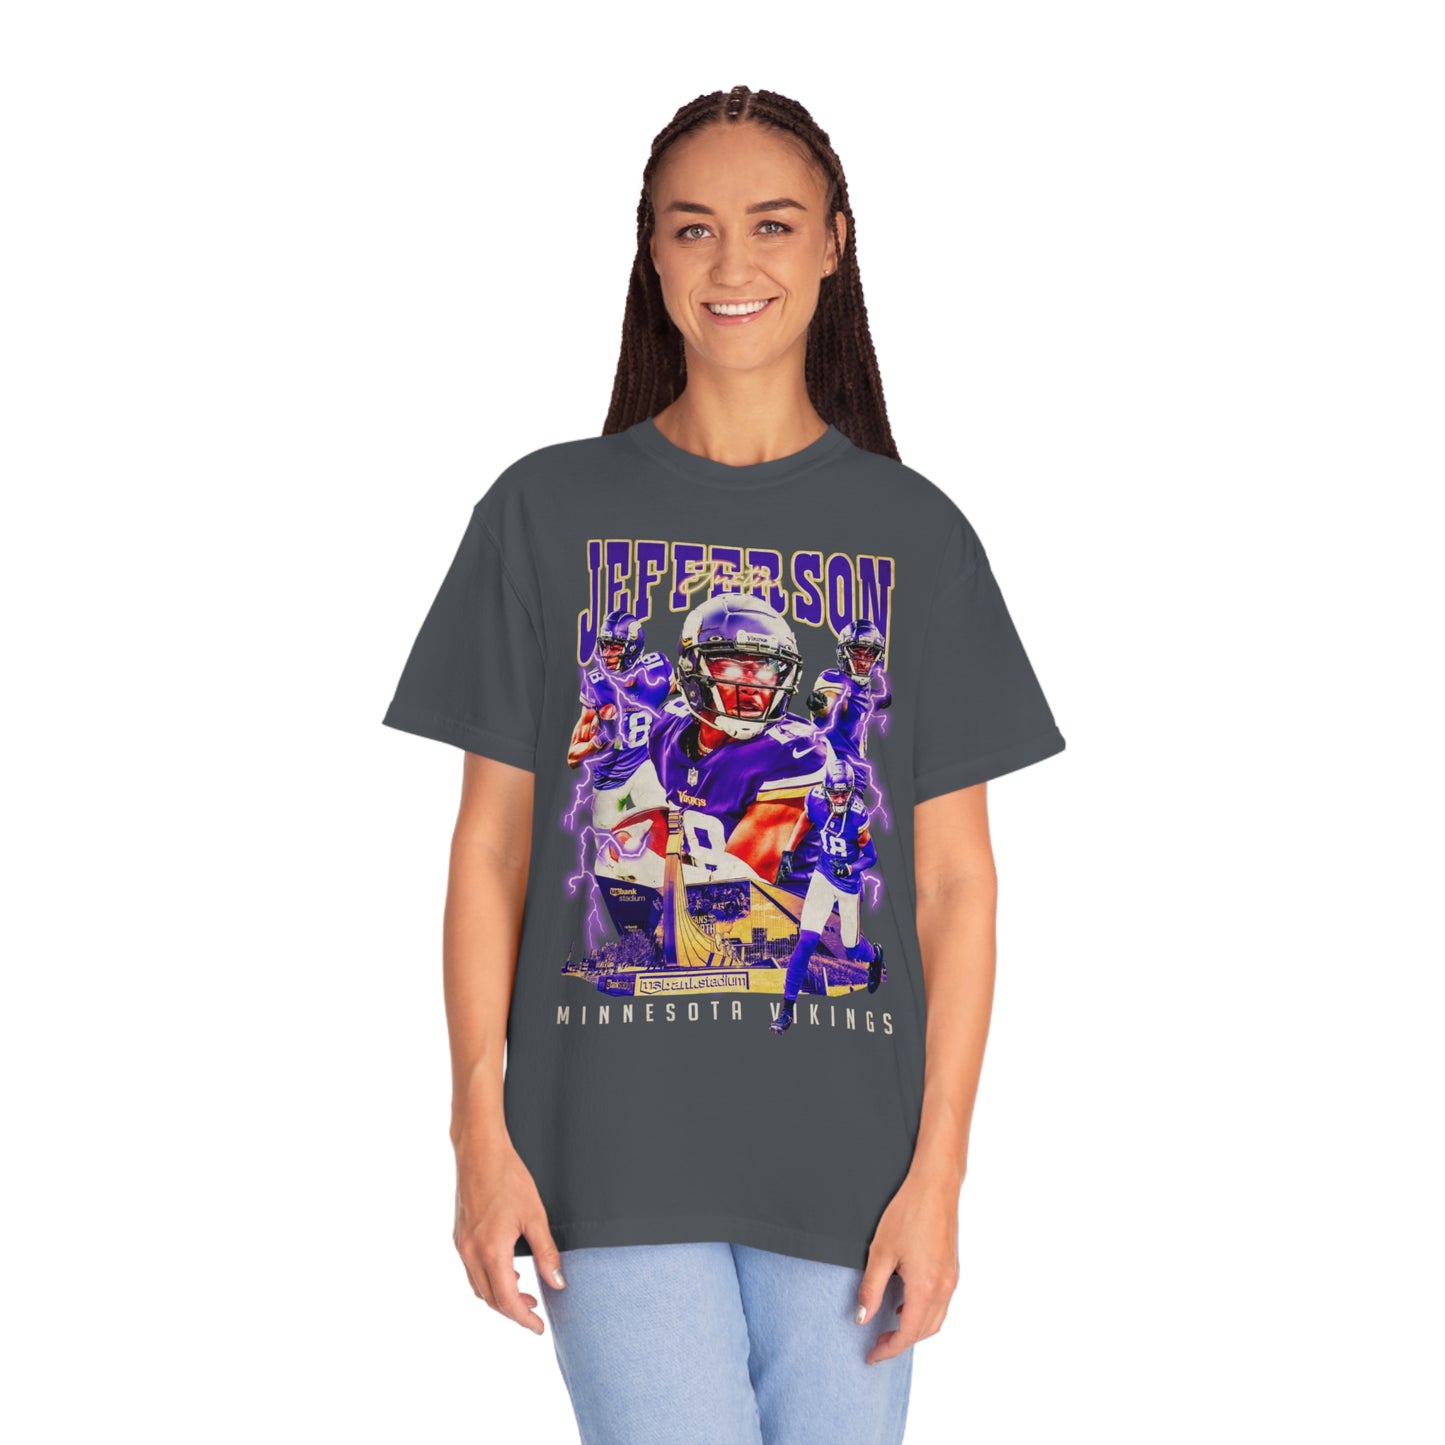 Jefferson Vikings Football Unisex Garment-Dyed T-shirt